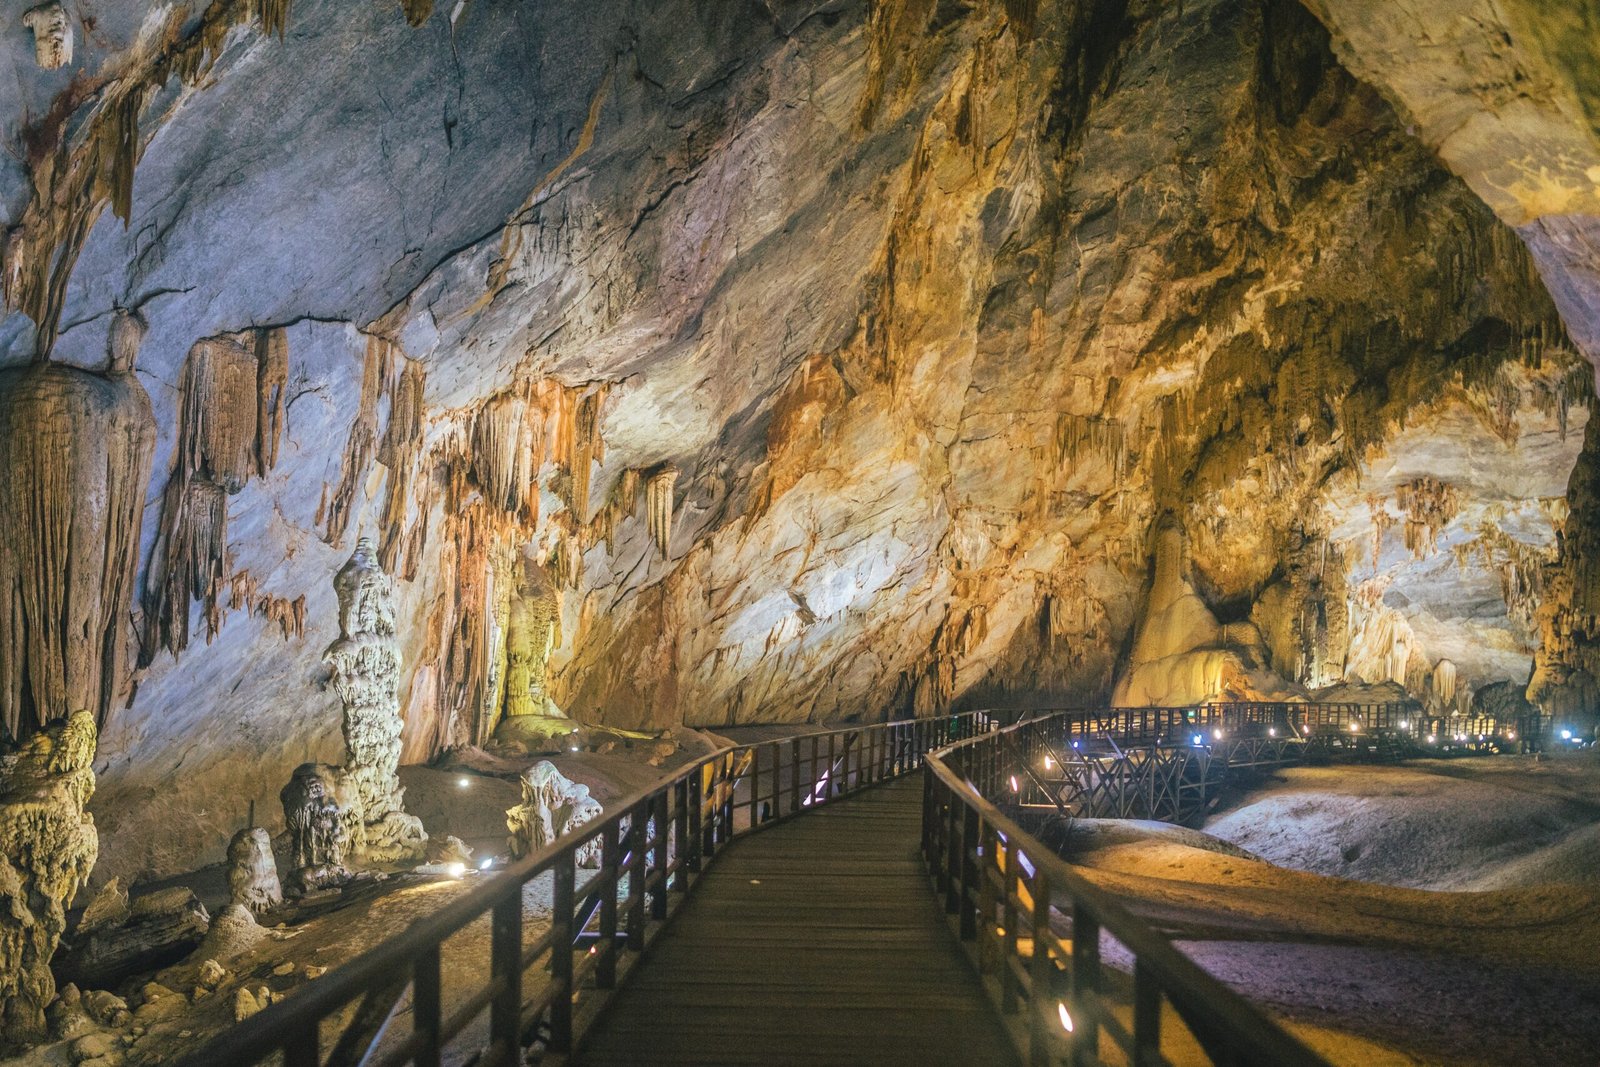 Cave Restaurants in Italy